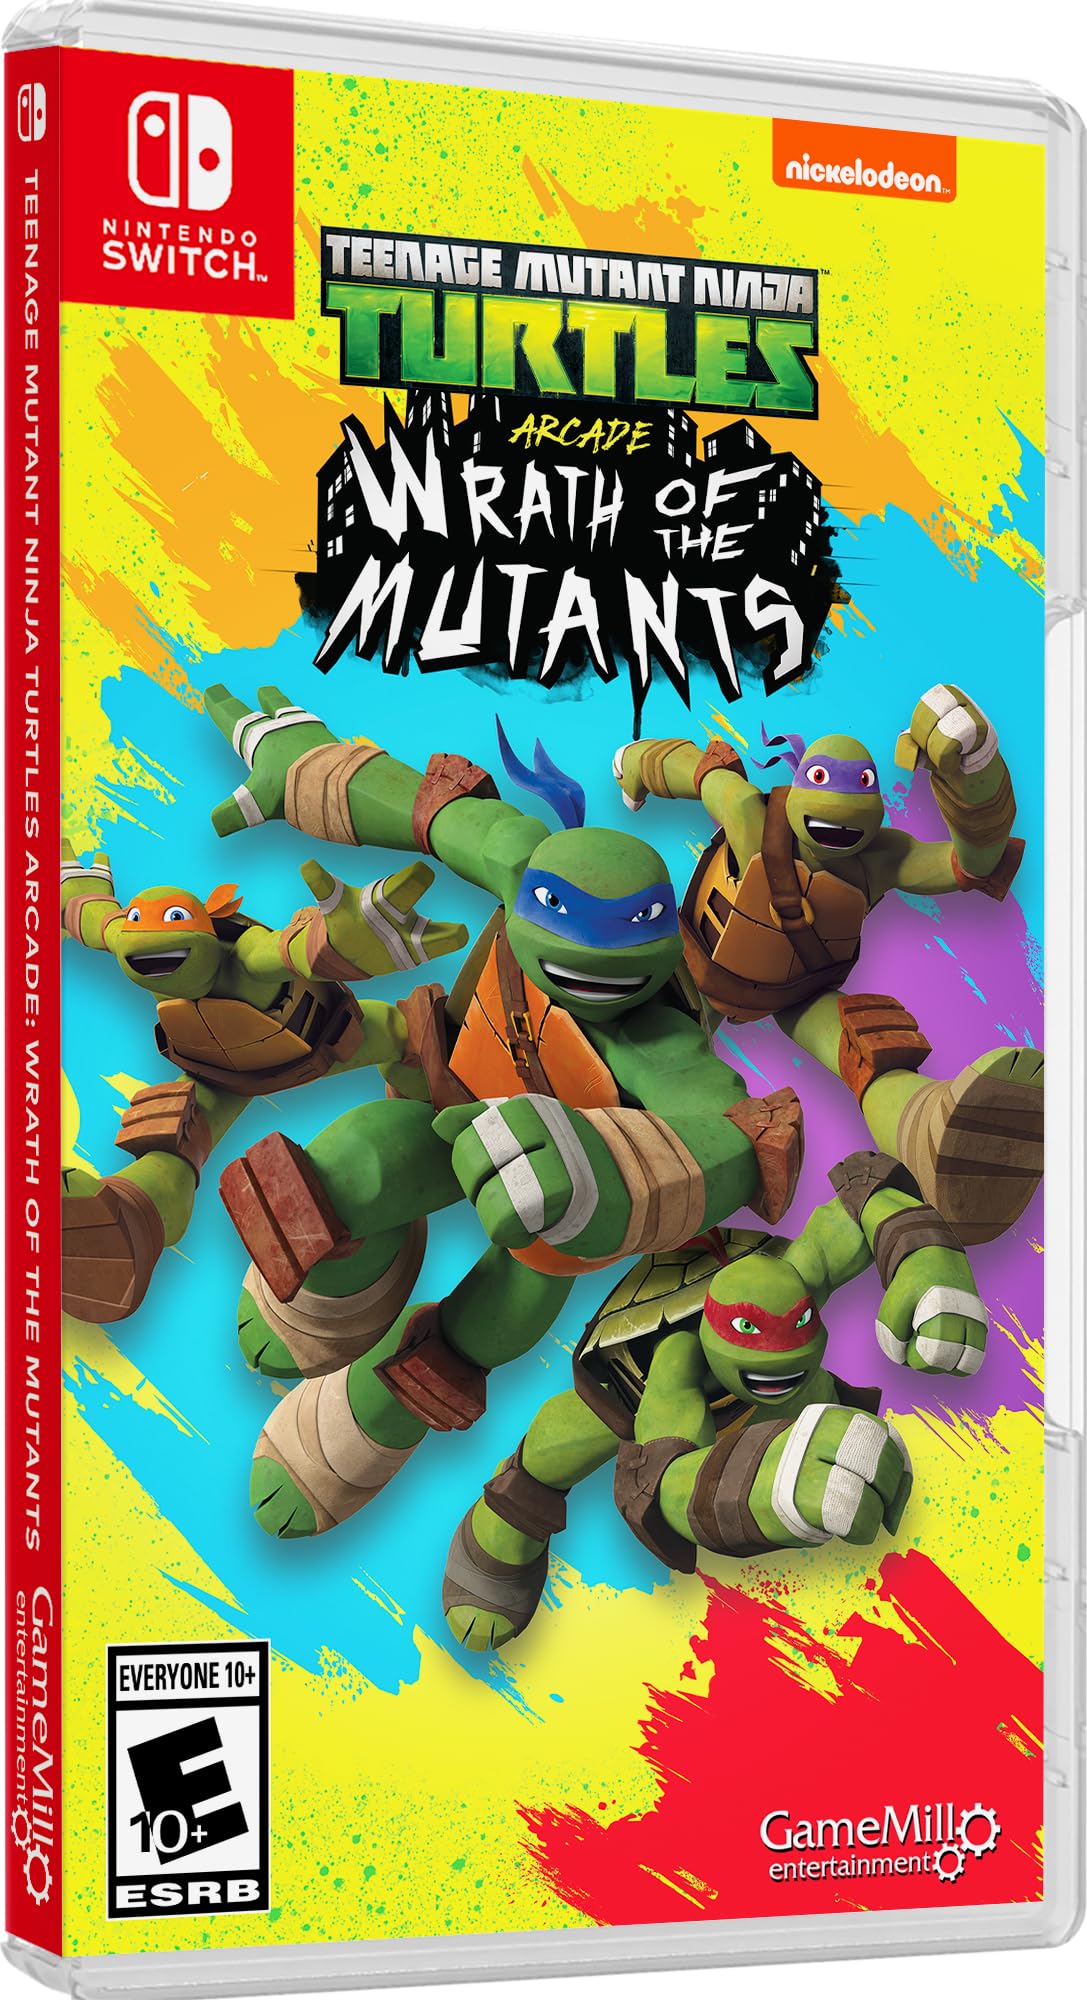 Teenage Mutant Ninja Turtles Arcade: Wrath of the Mutants - (NSW) Nintendo Switch Video Games Game Mill   